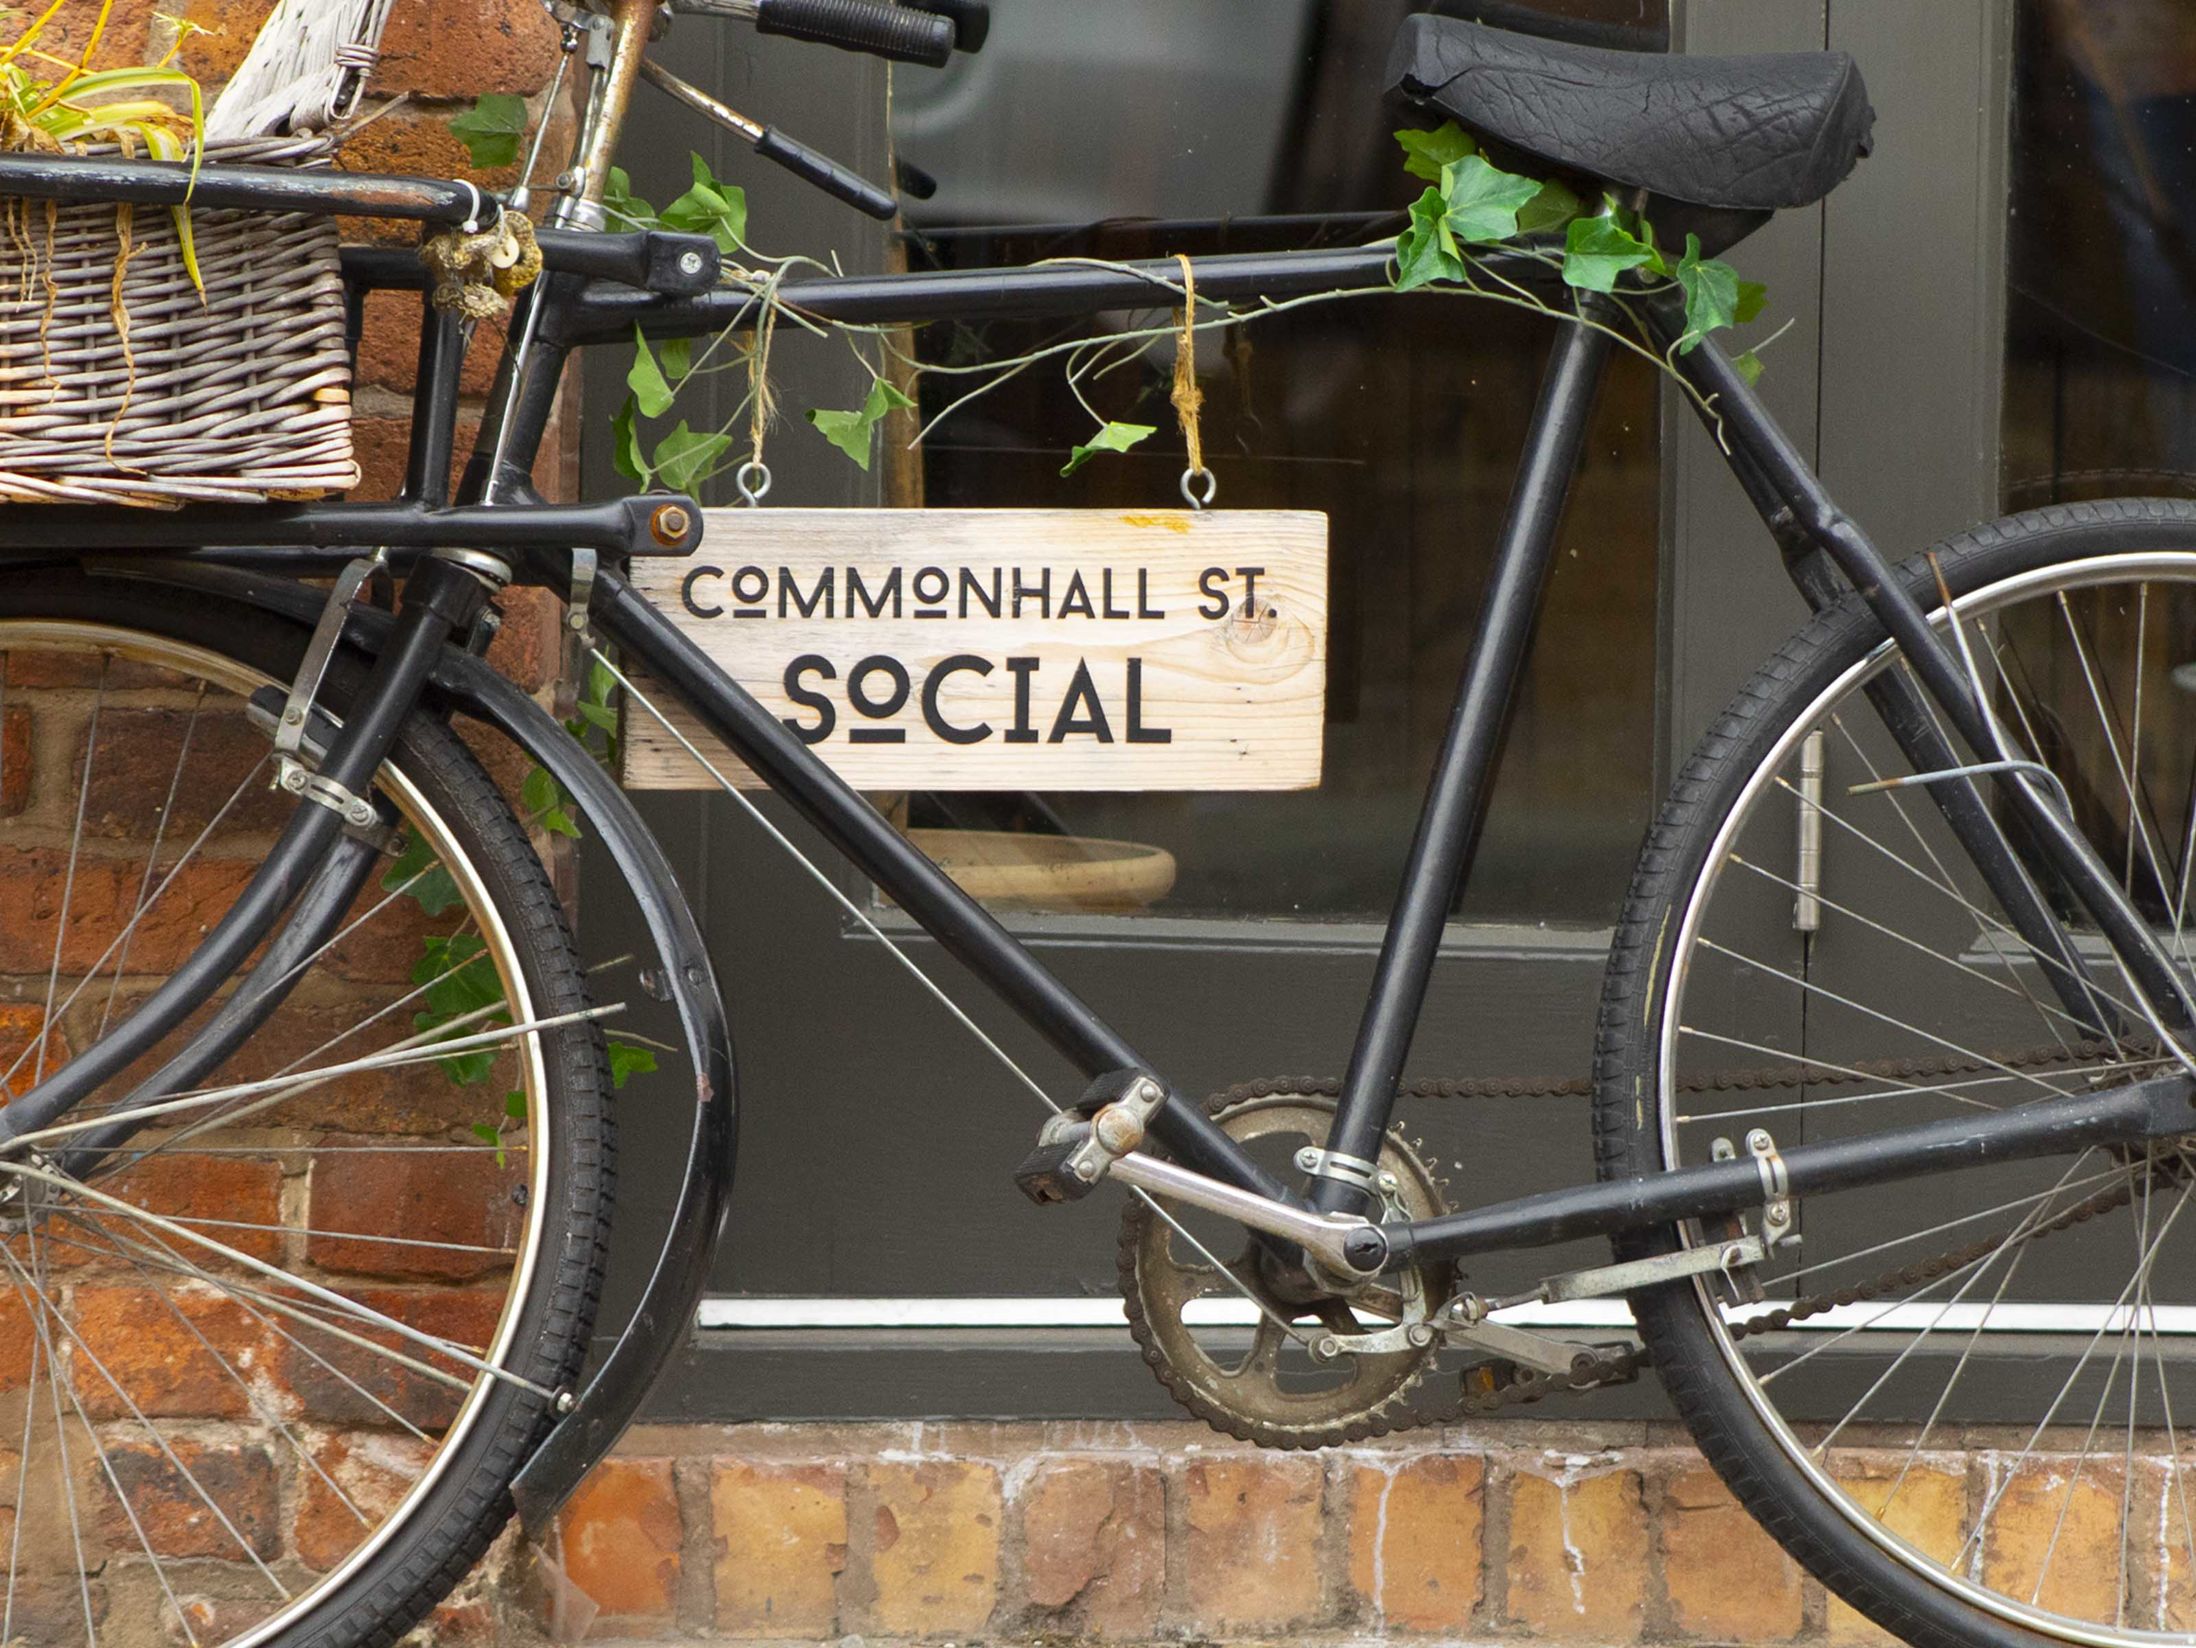 Commonhall Street Social - Best Bars in Chester